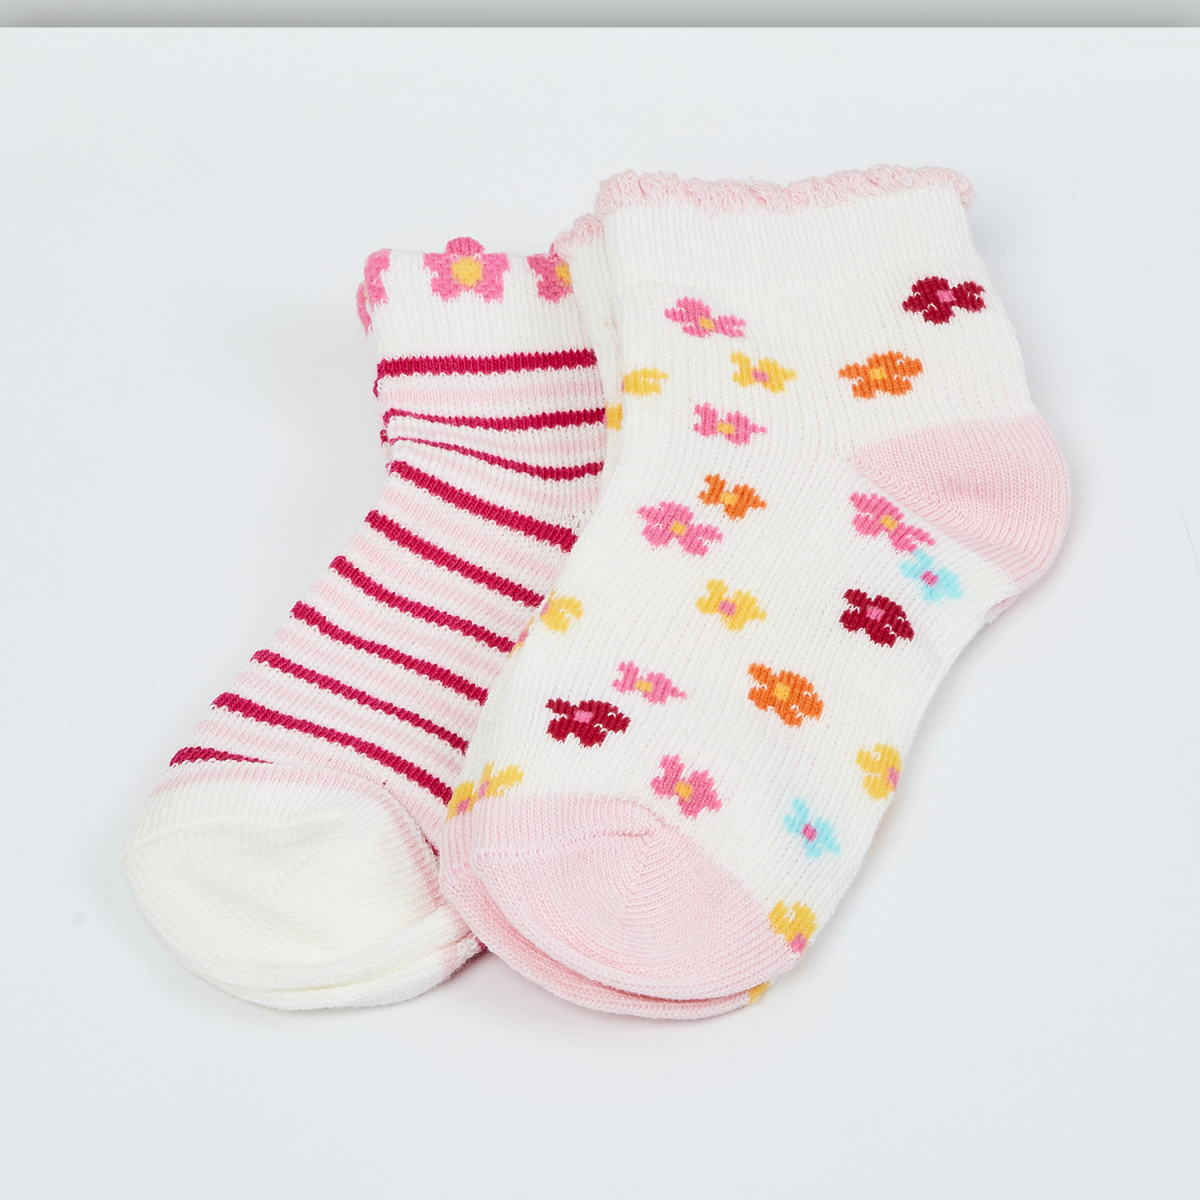 MAX Kids Patterned Knit Socks - Pack of 2 - 2-4 Y